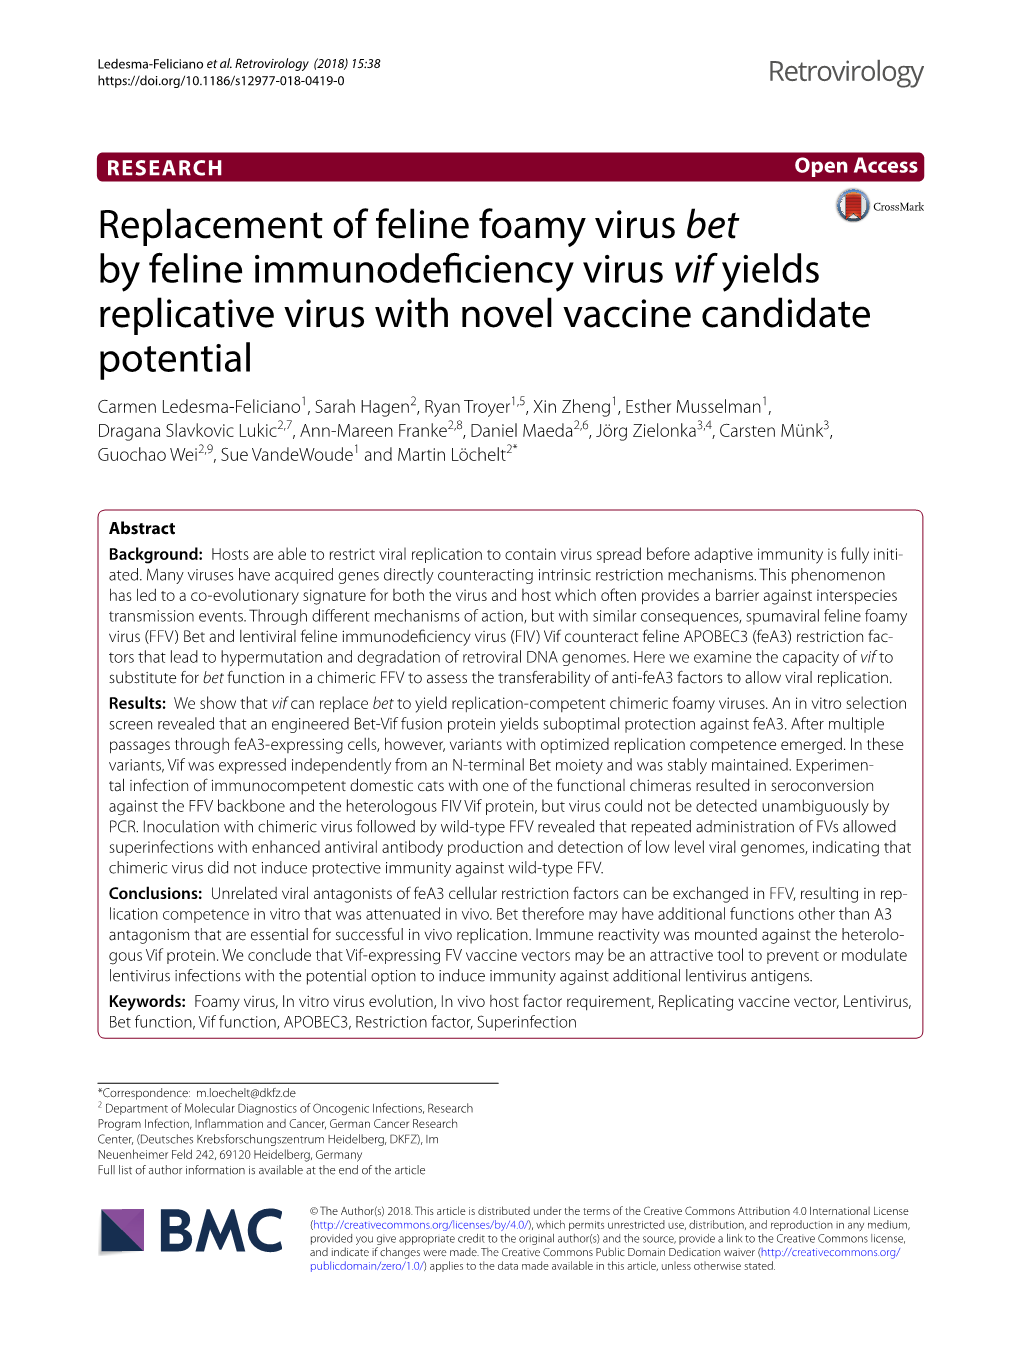 Replacement of Feline Foamy Virus Bet by Feline Immunodeficiency Virus Vif Yields Replicative Virus with Novel Vaccine Candidate